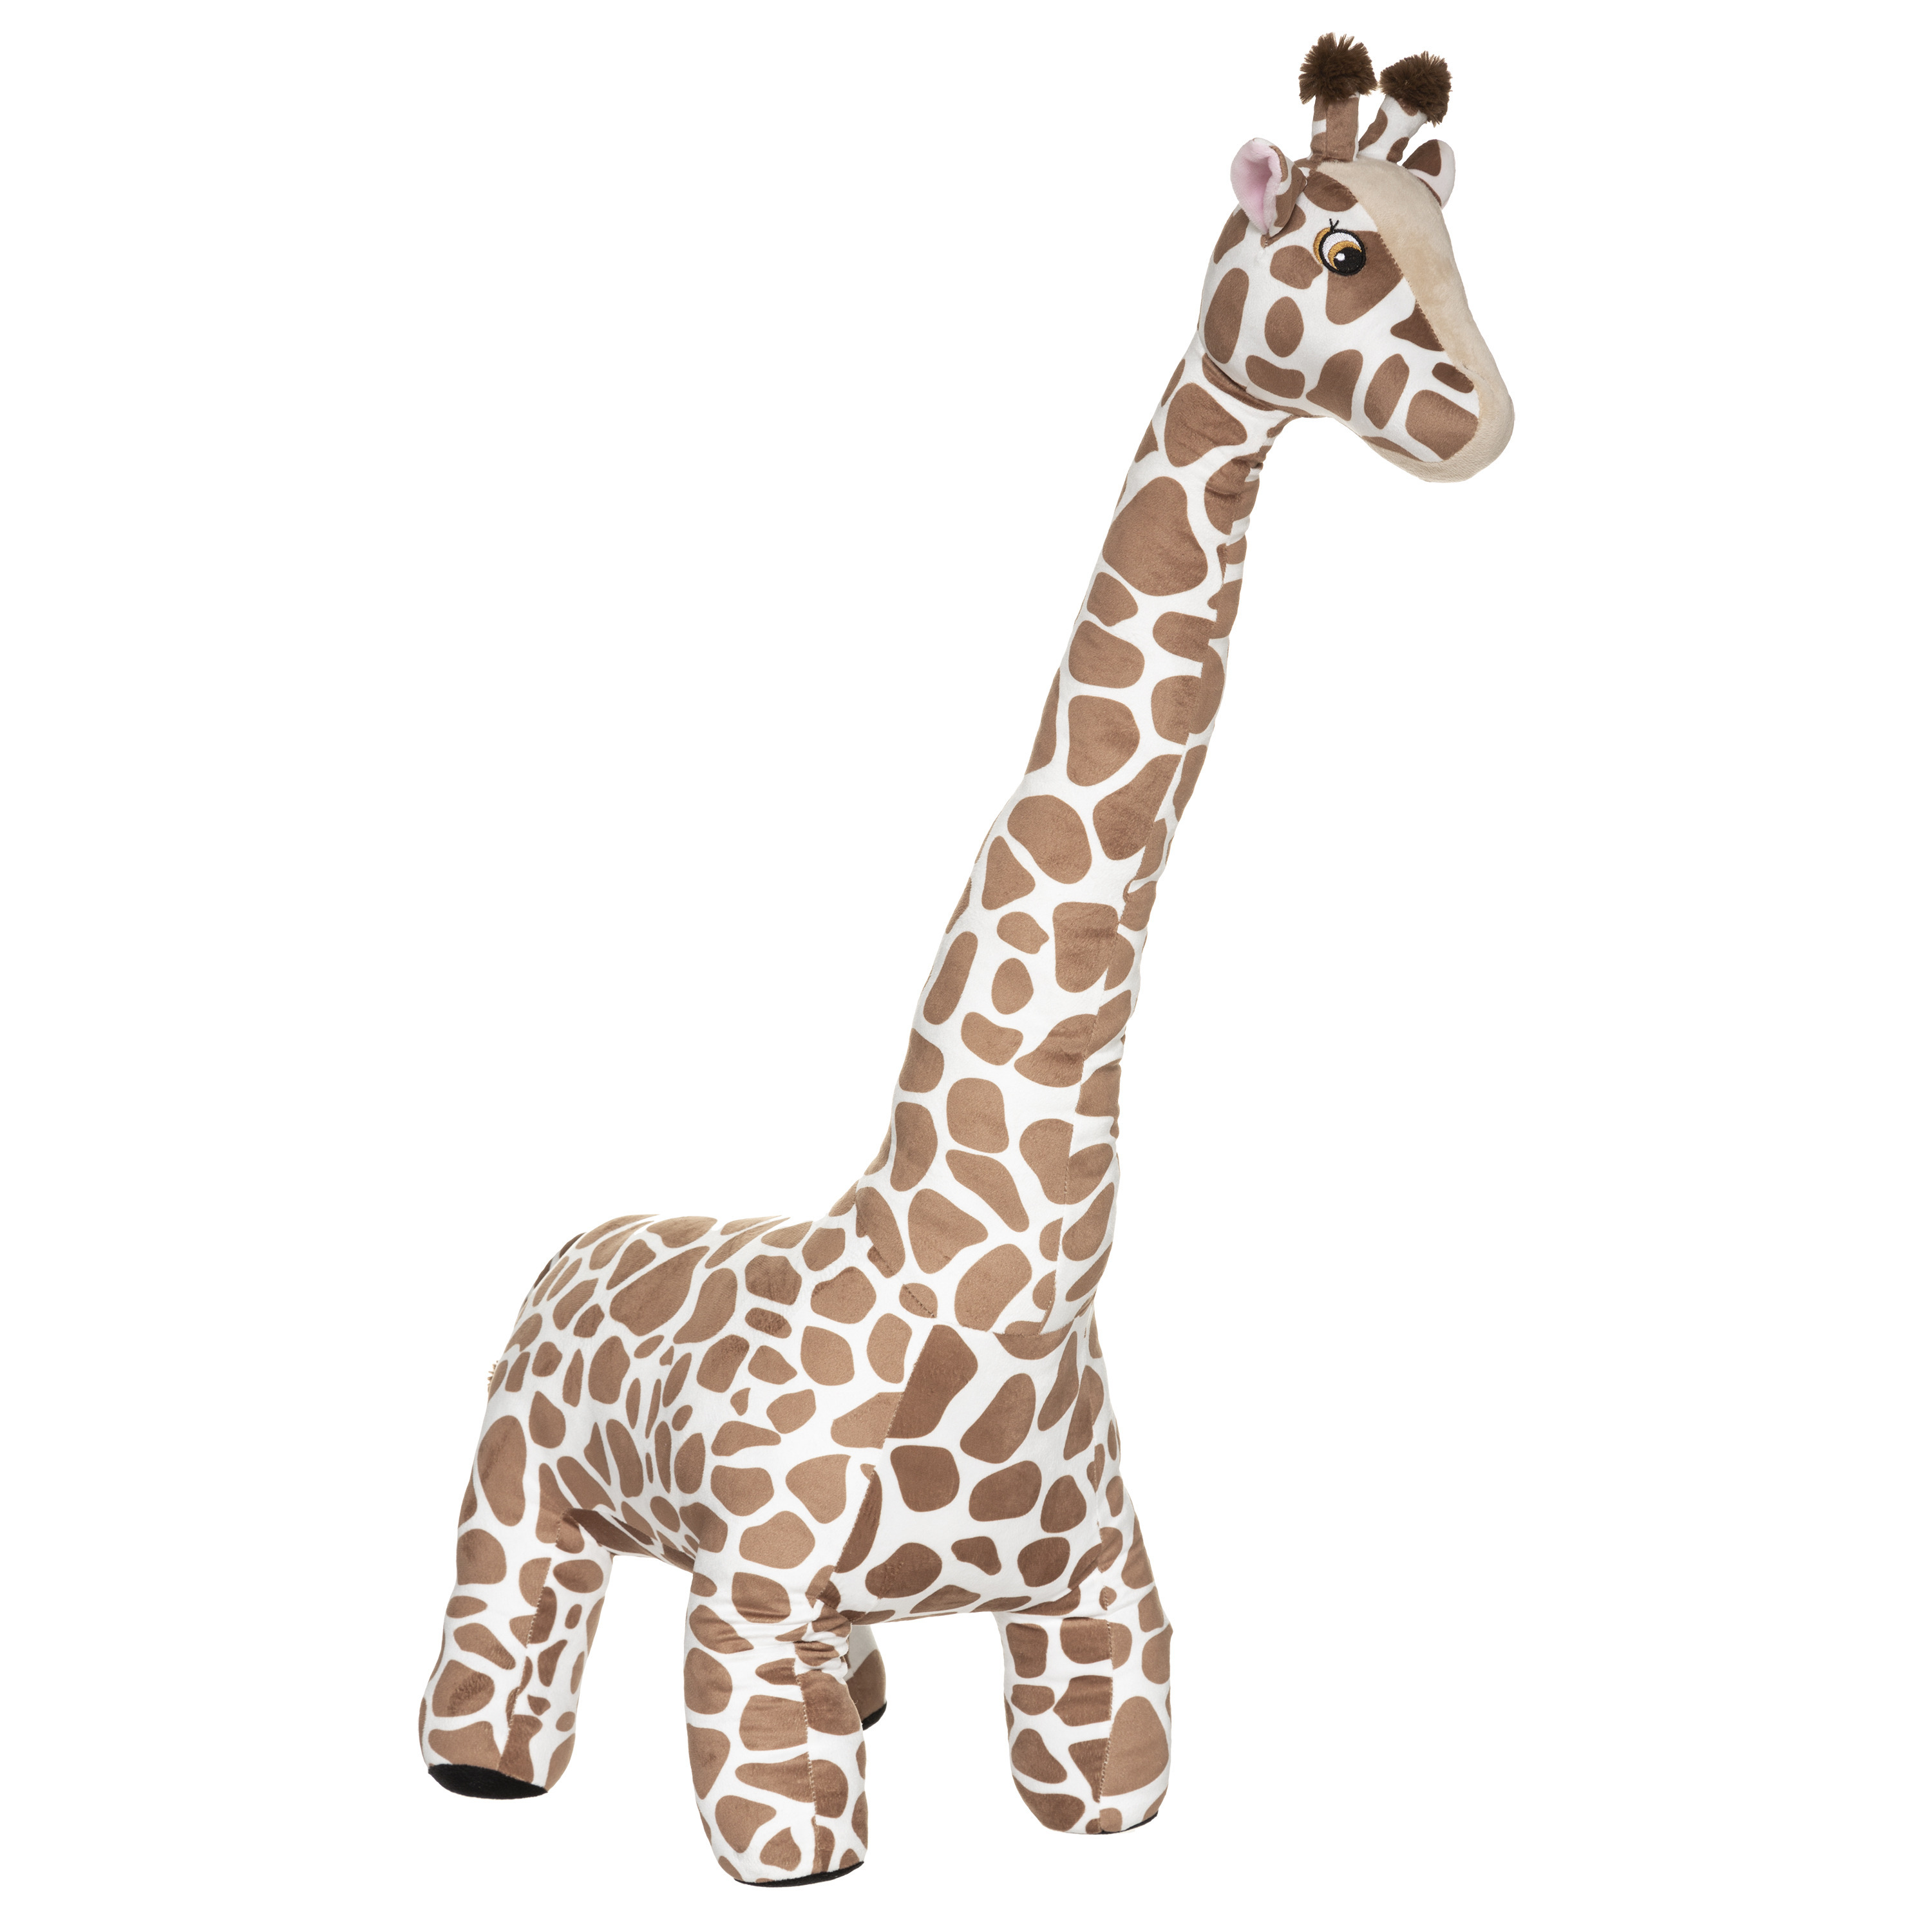 Giraffe knuffel van zachte pluche gevlekt patroon 100 cm Extra groot